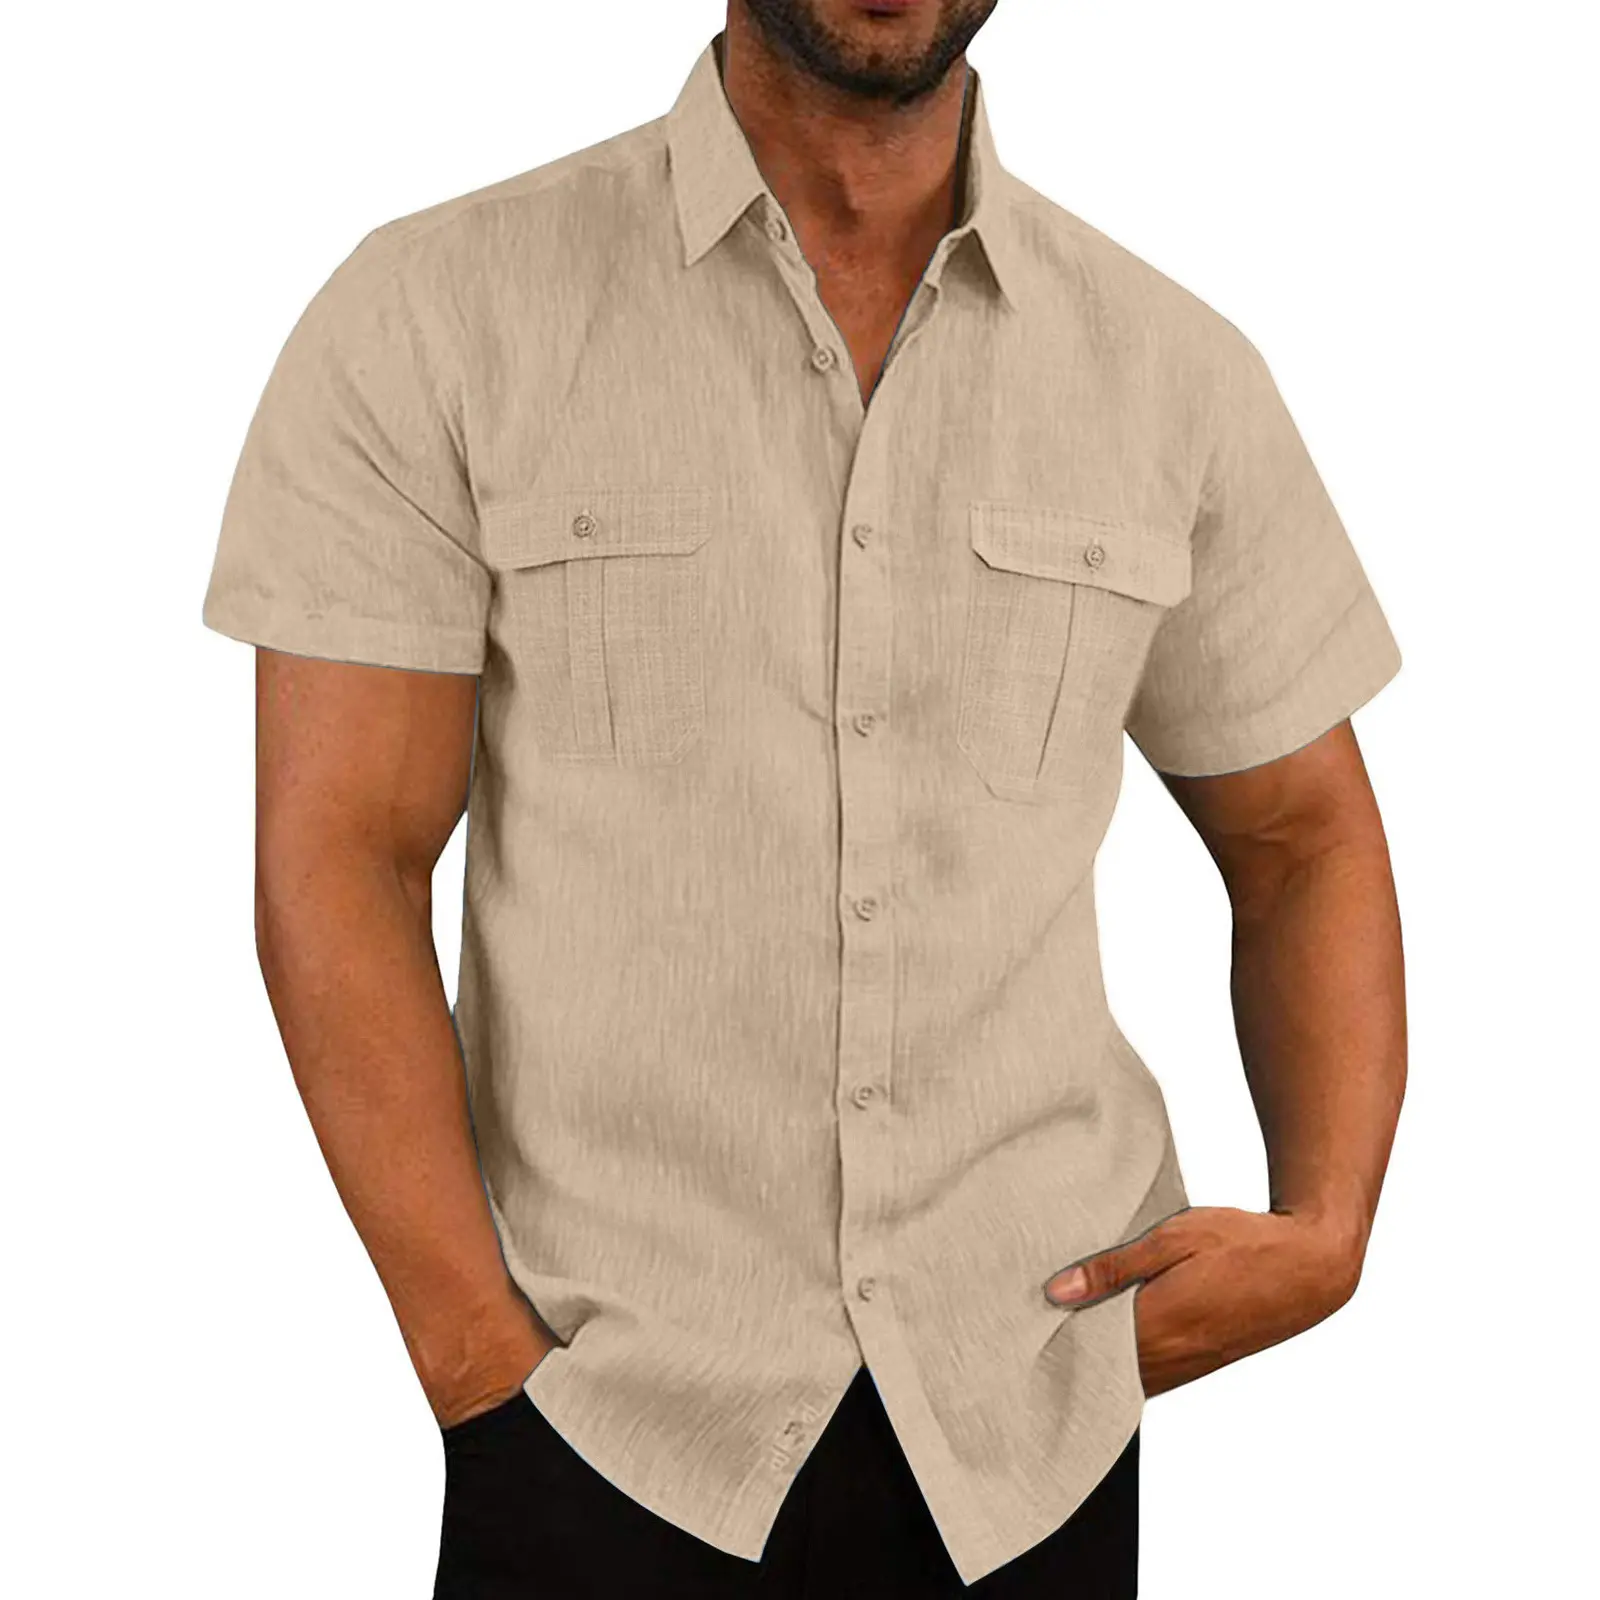 men's shirt double pocket cotton linen short sleeve casual vacation 7 colors Shirt